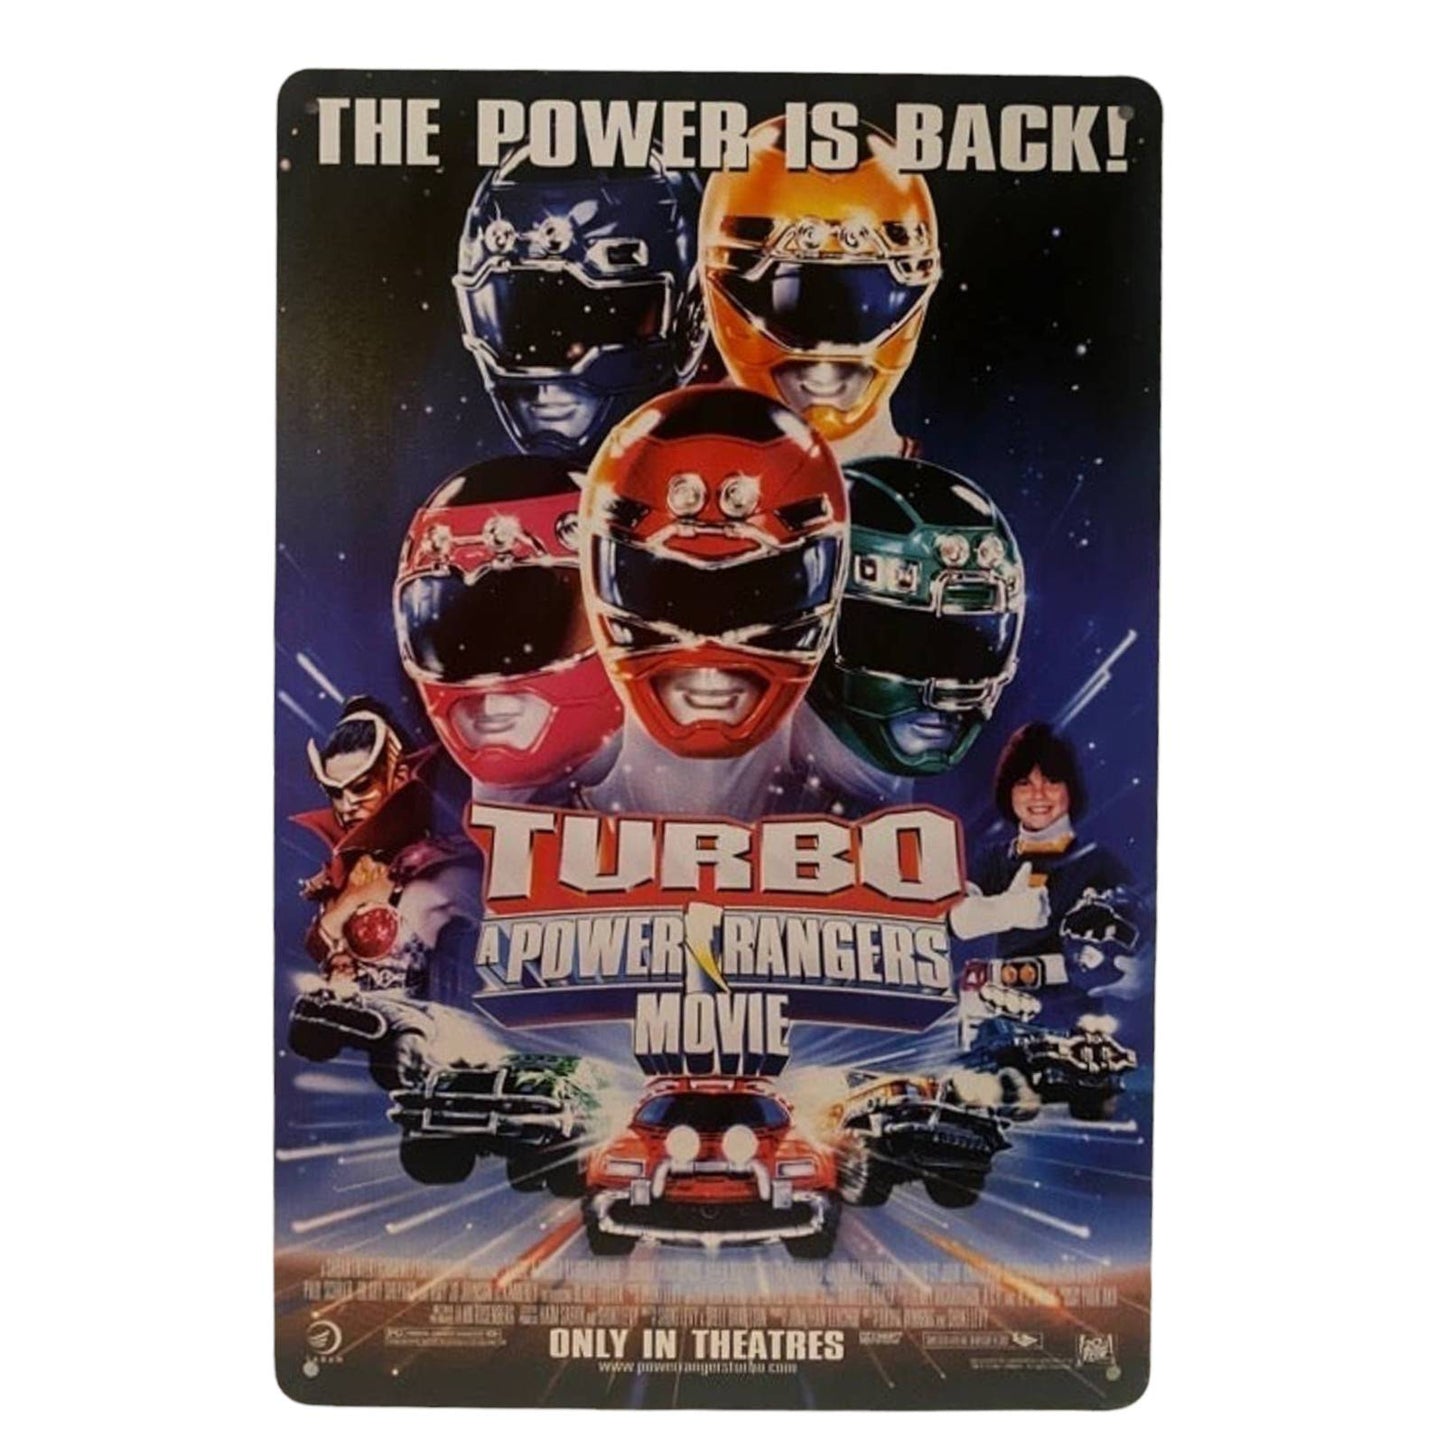 Turbo A Power Rangers Movie Poster Metal Tin Sign 8"x12"